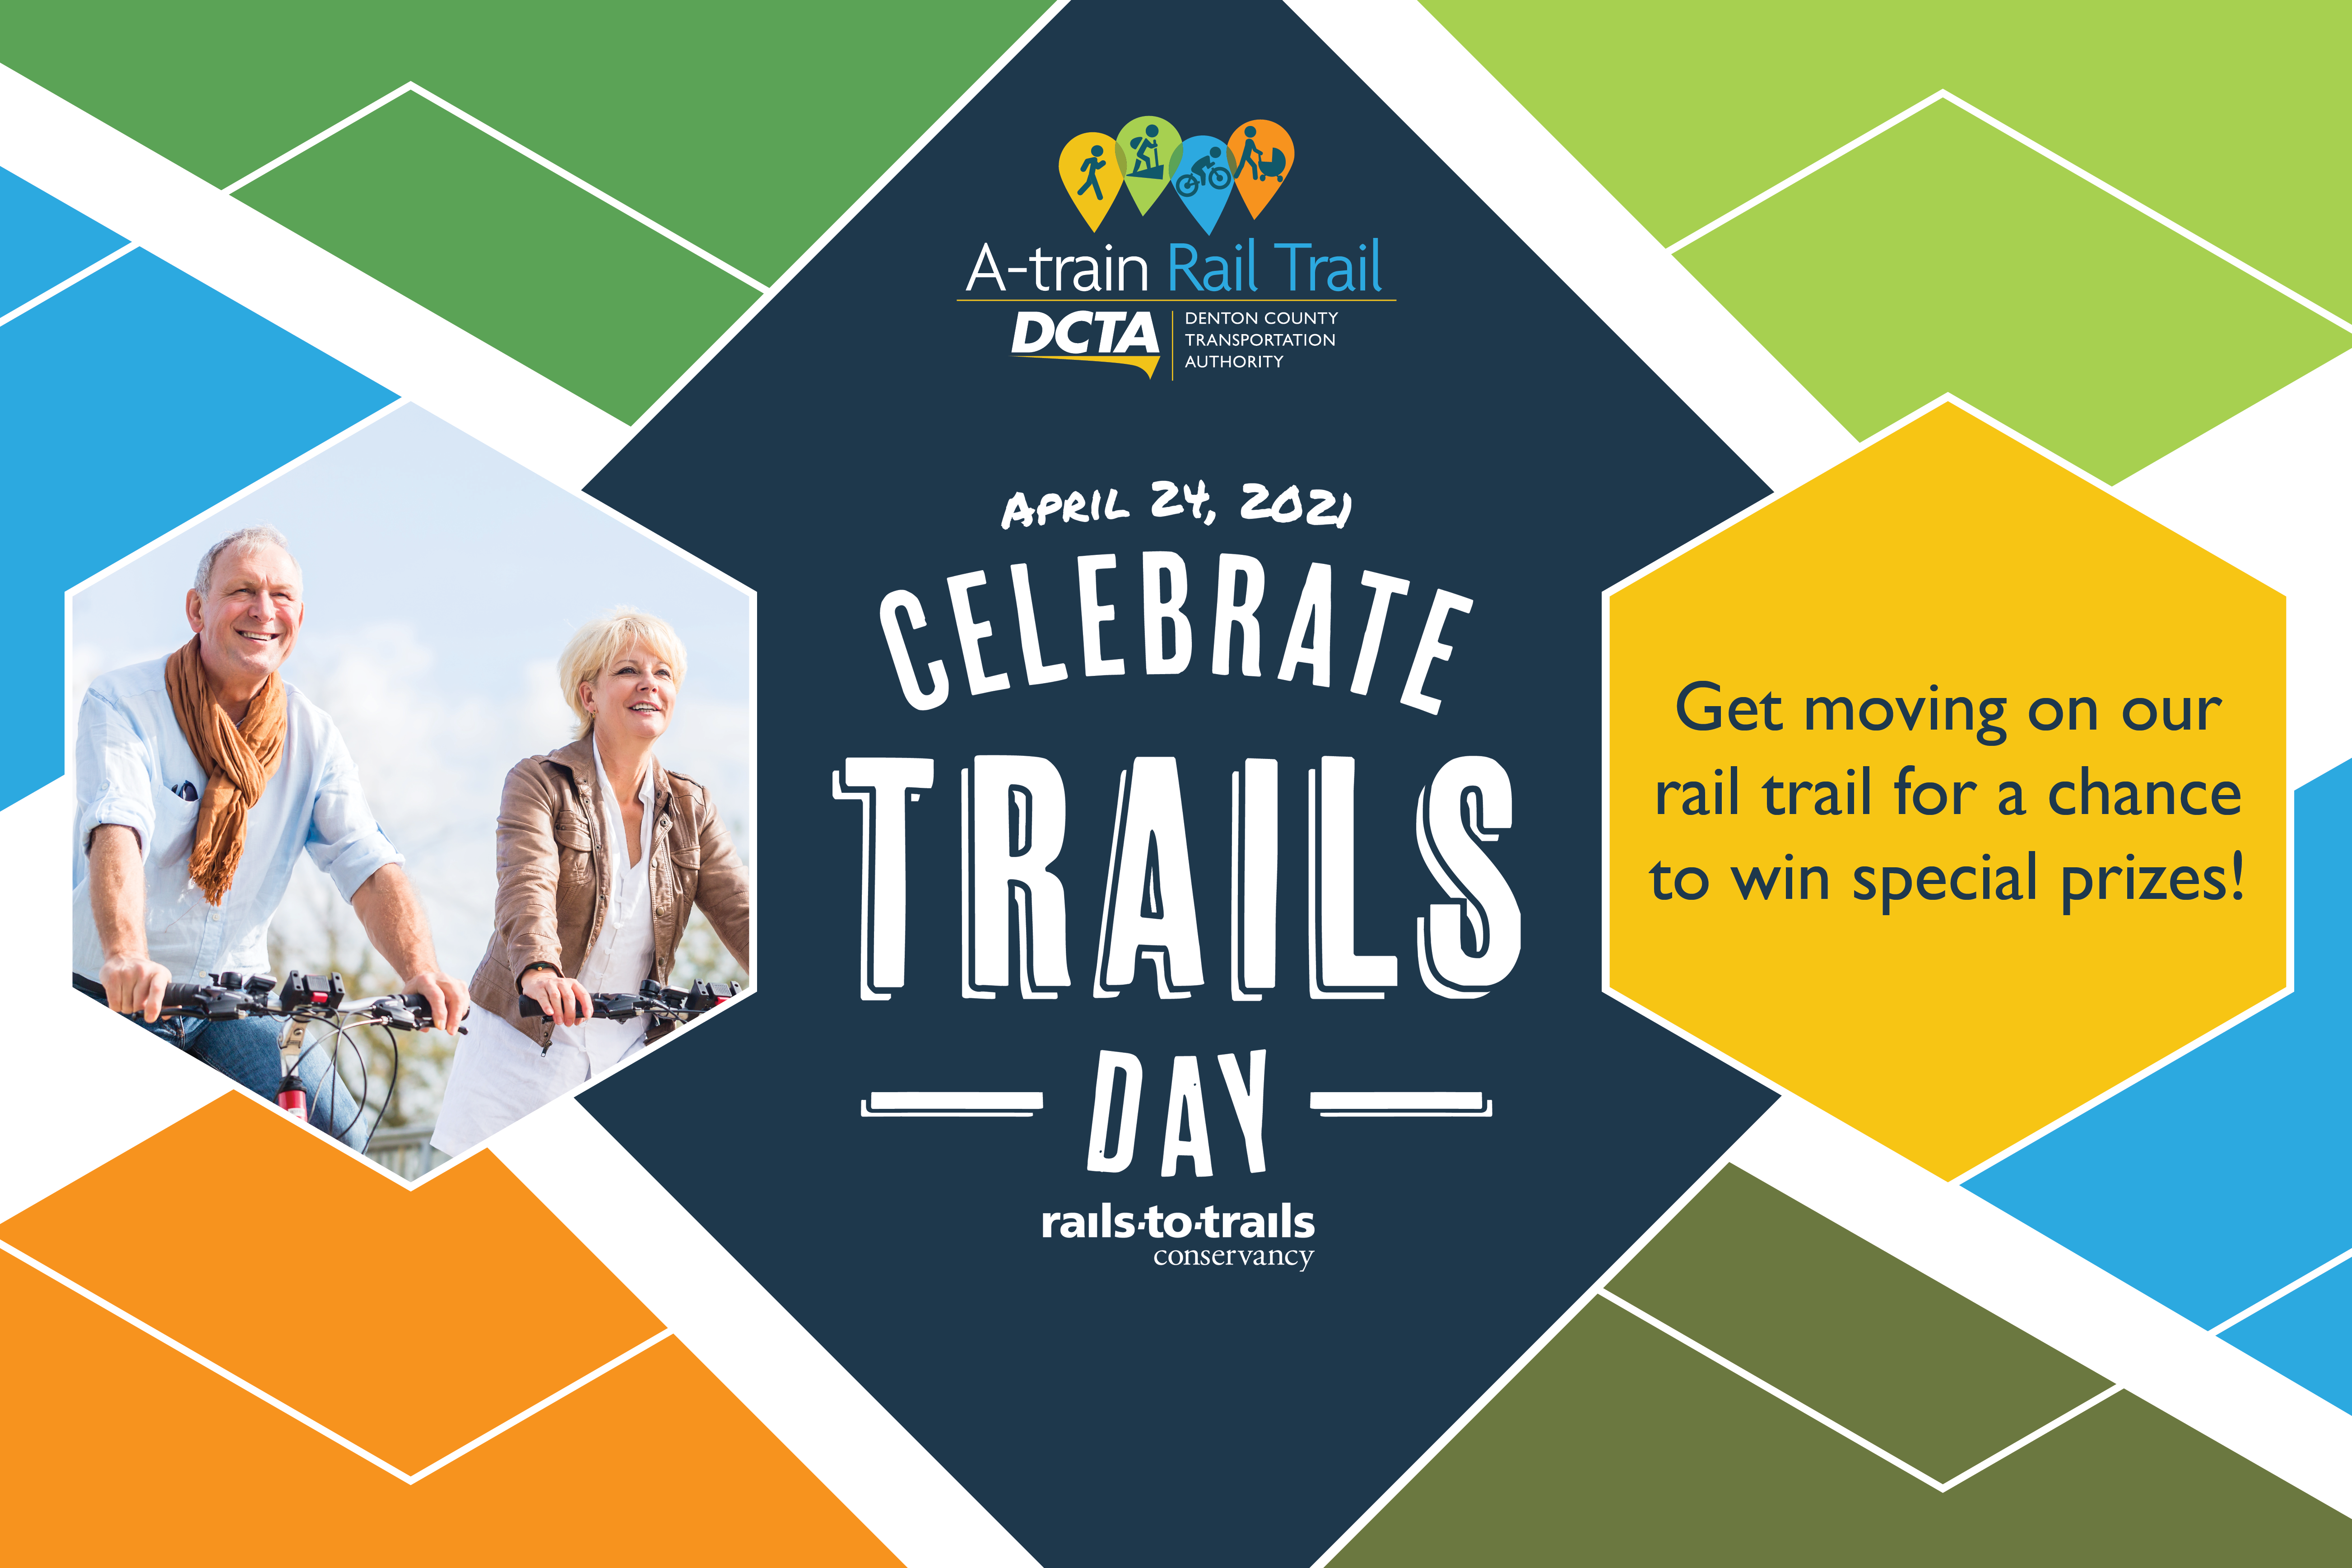 Celebrate Trails Day on DCTA’s A-train Rail Trail